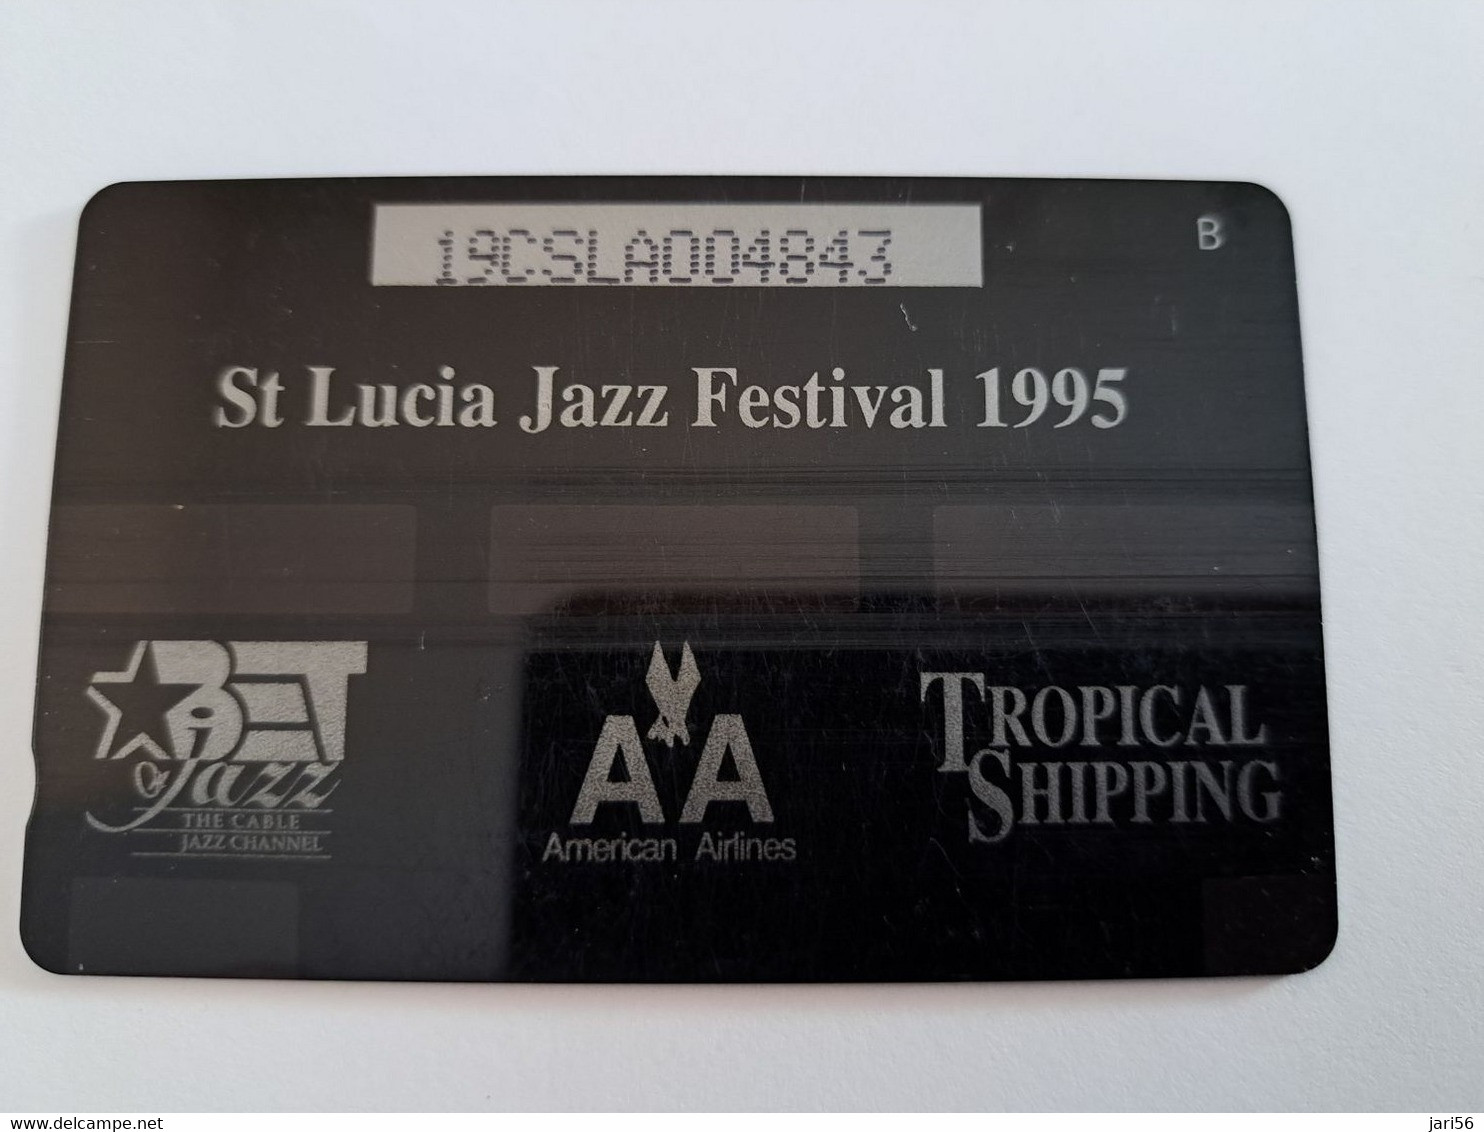 ST LUCIA    $ 20   CABLE & WIRELESS  STL-19A  19CSLA      JAZZ FESTIVAL 1995  Fine Used Card ** 10880** - Santa Lucia